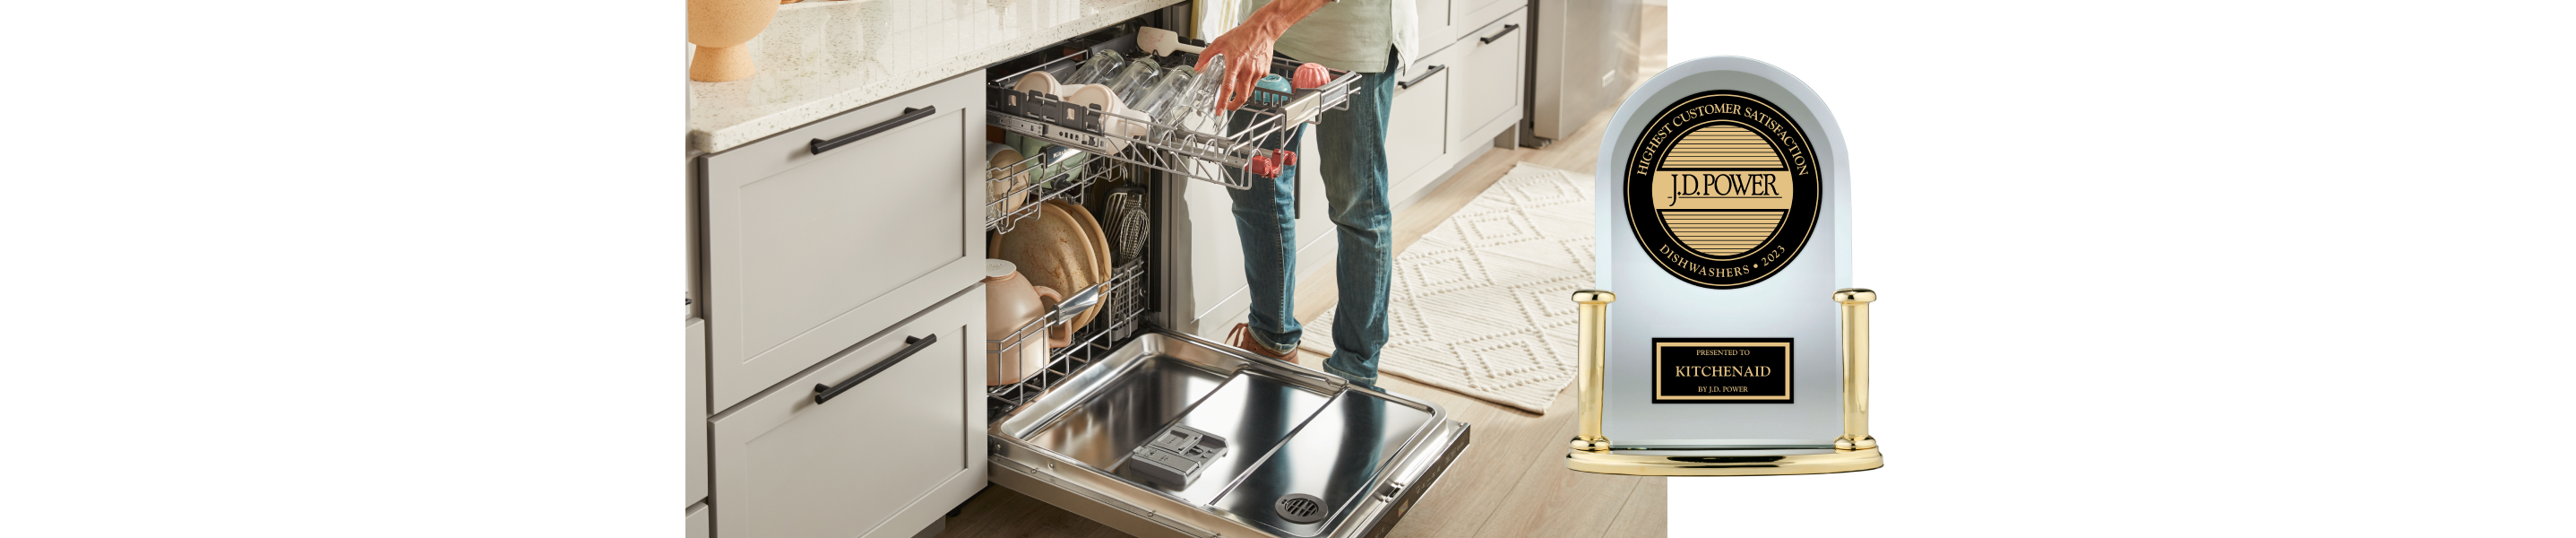 Standard Dishwasher Sizes Guide